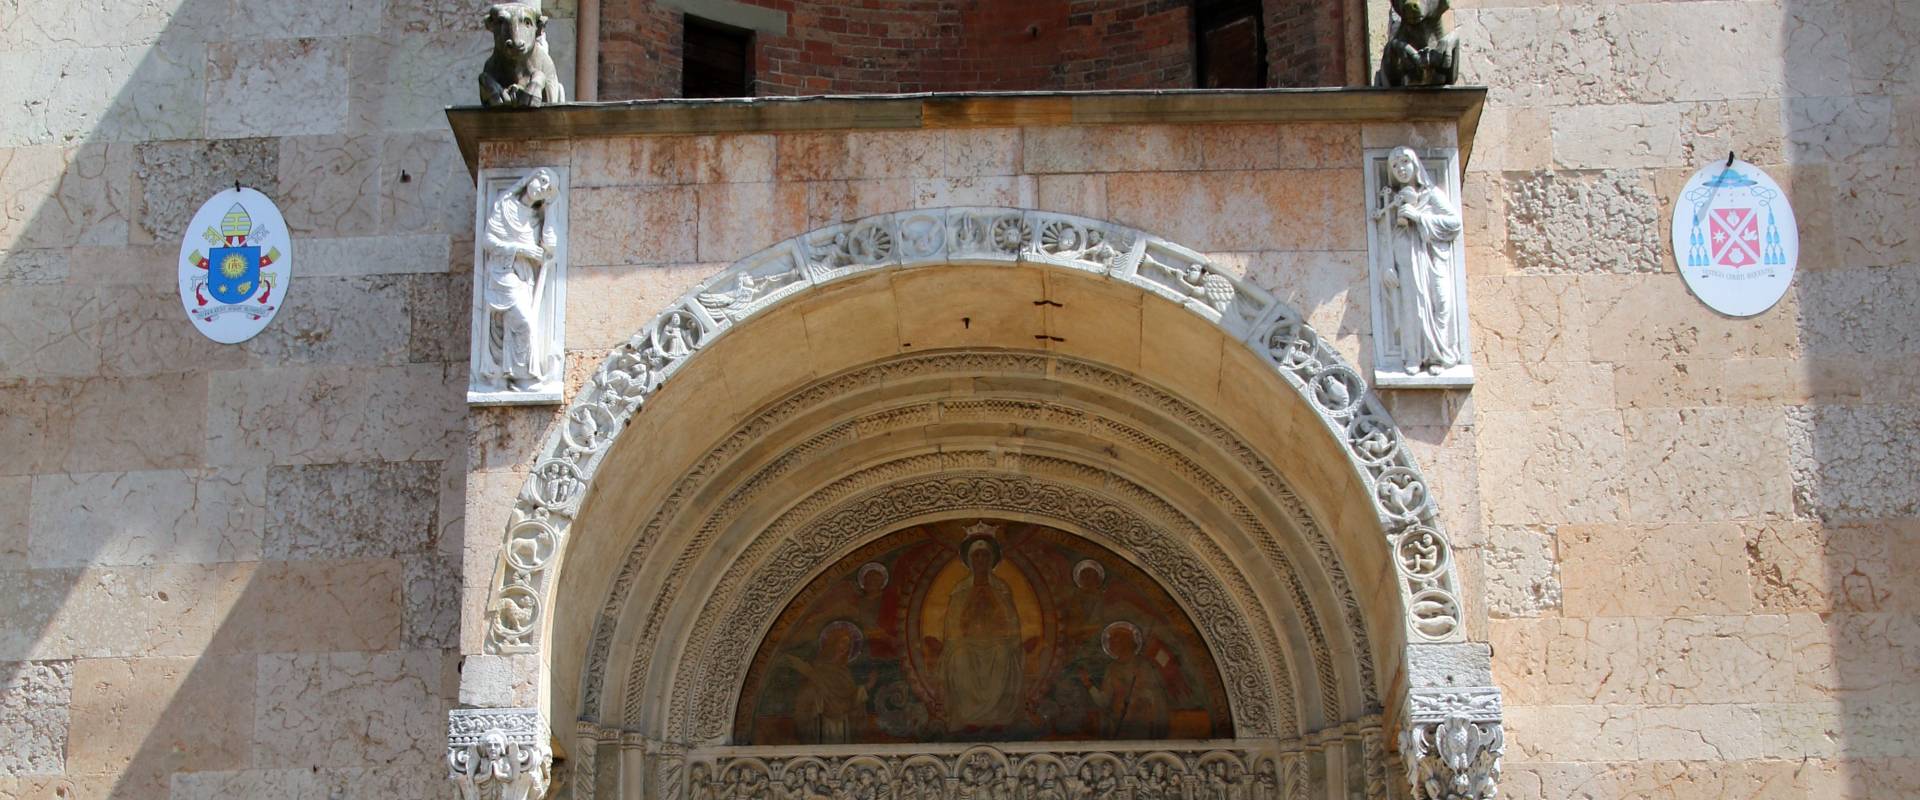 Duomo (Piacenza), portale centrale, protiro 06 photo by Mongolo1984